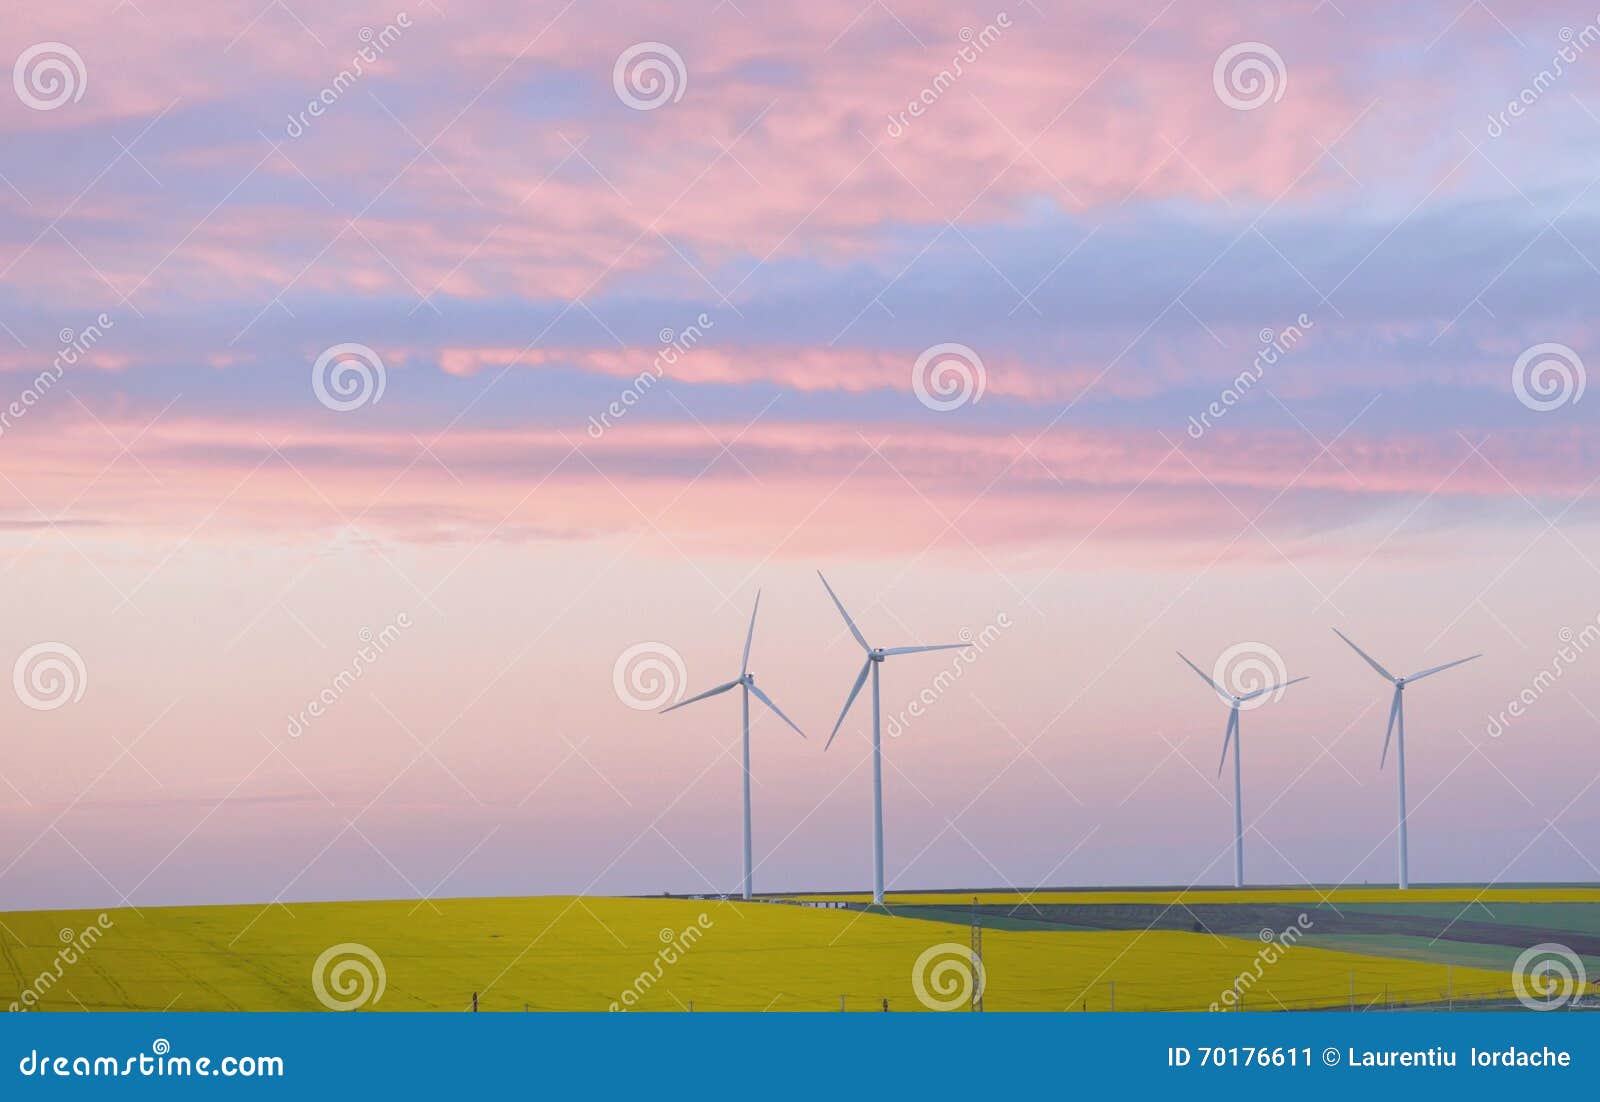 eolian field and wind turbines